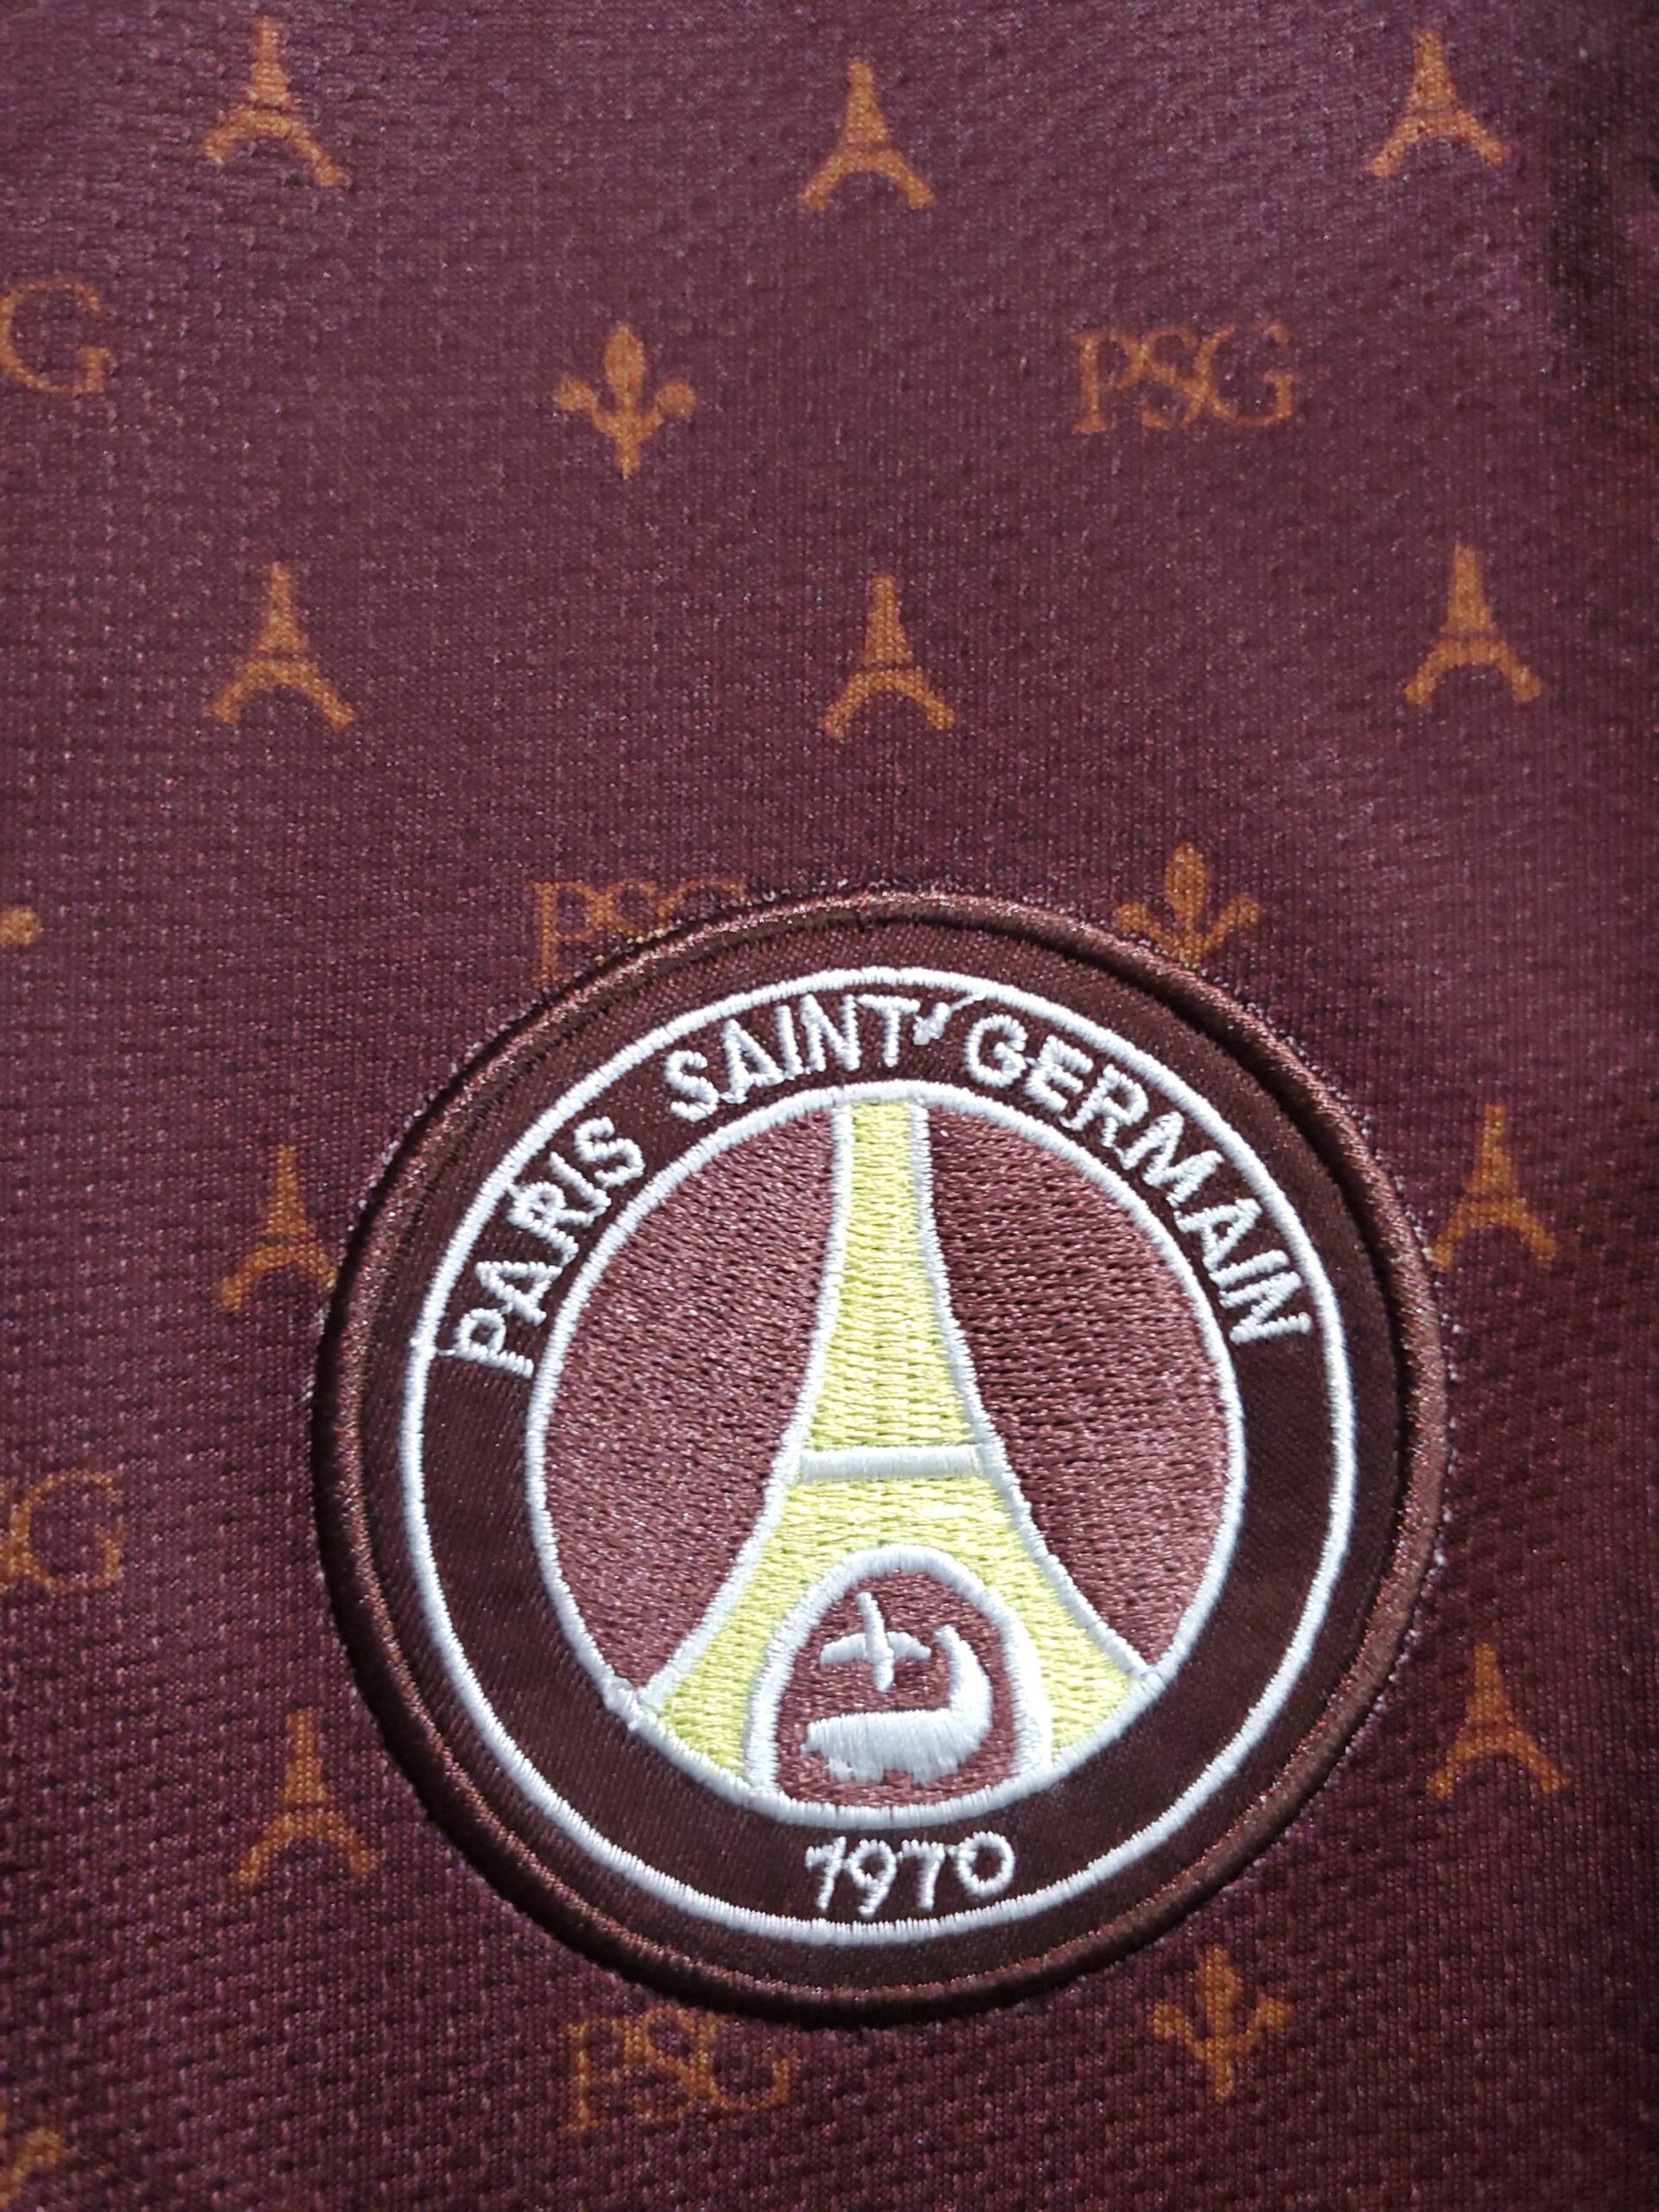 2006/07】 / Paris Saint-Germain / Away